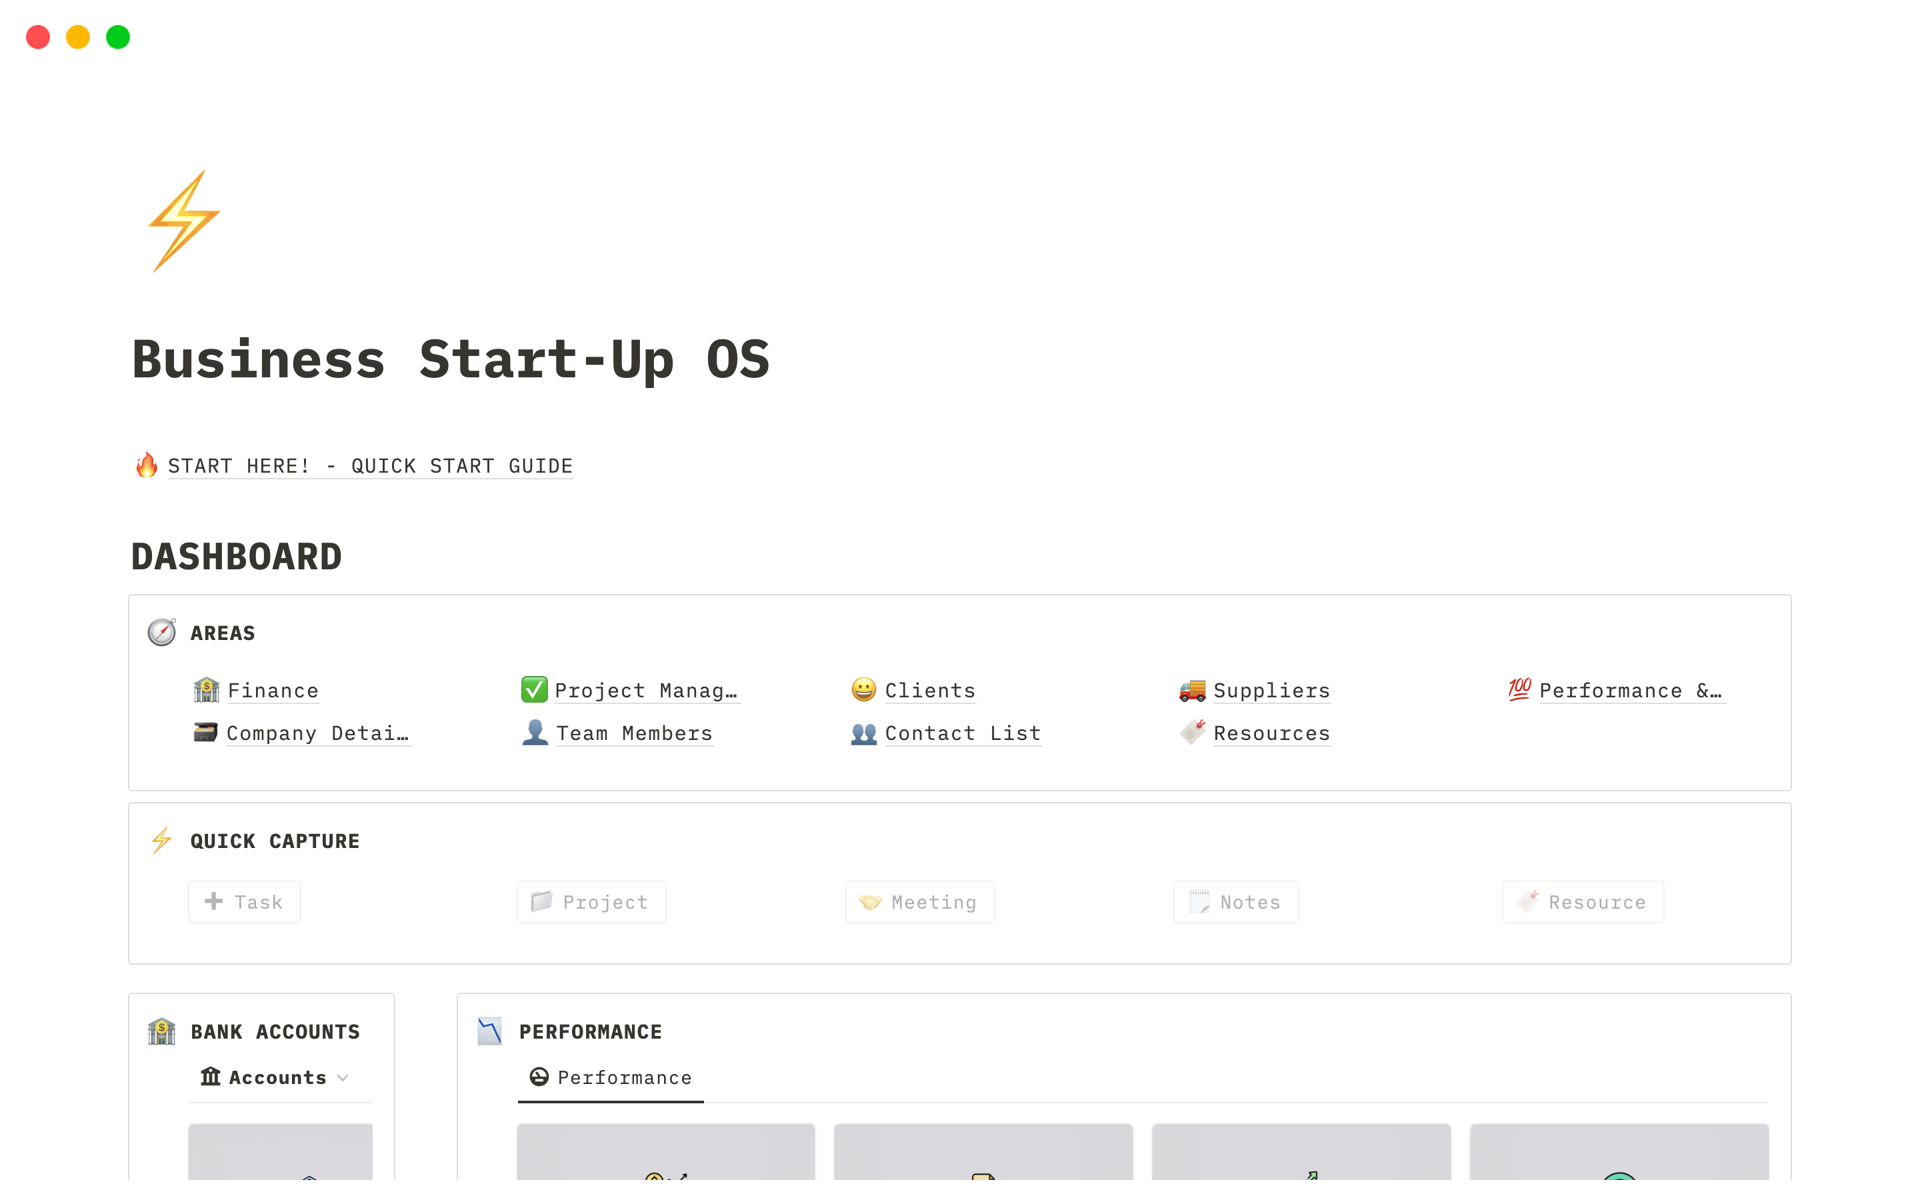 Vista previa de una plantilla para Business Start-Up OS